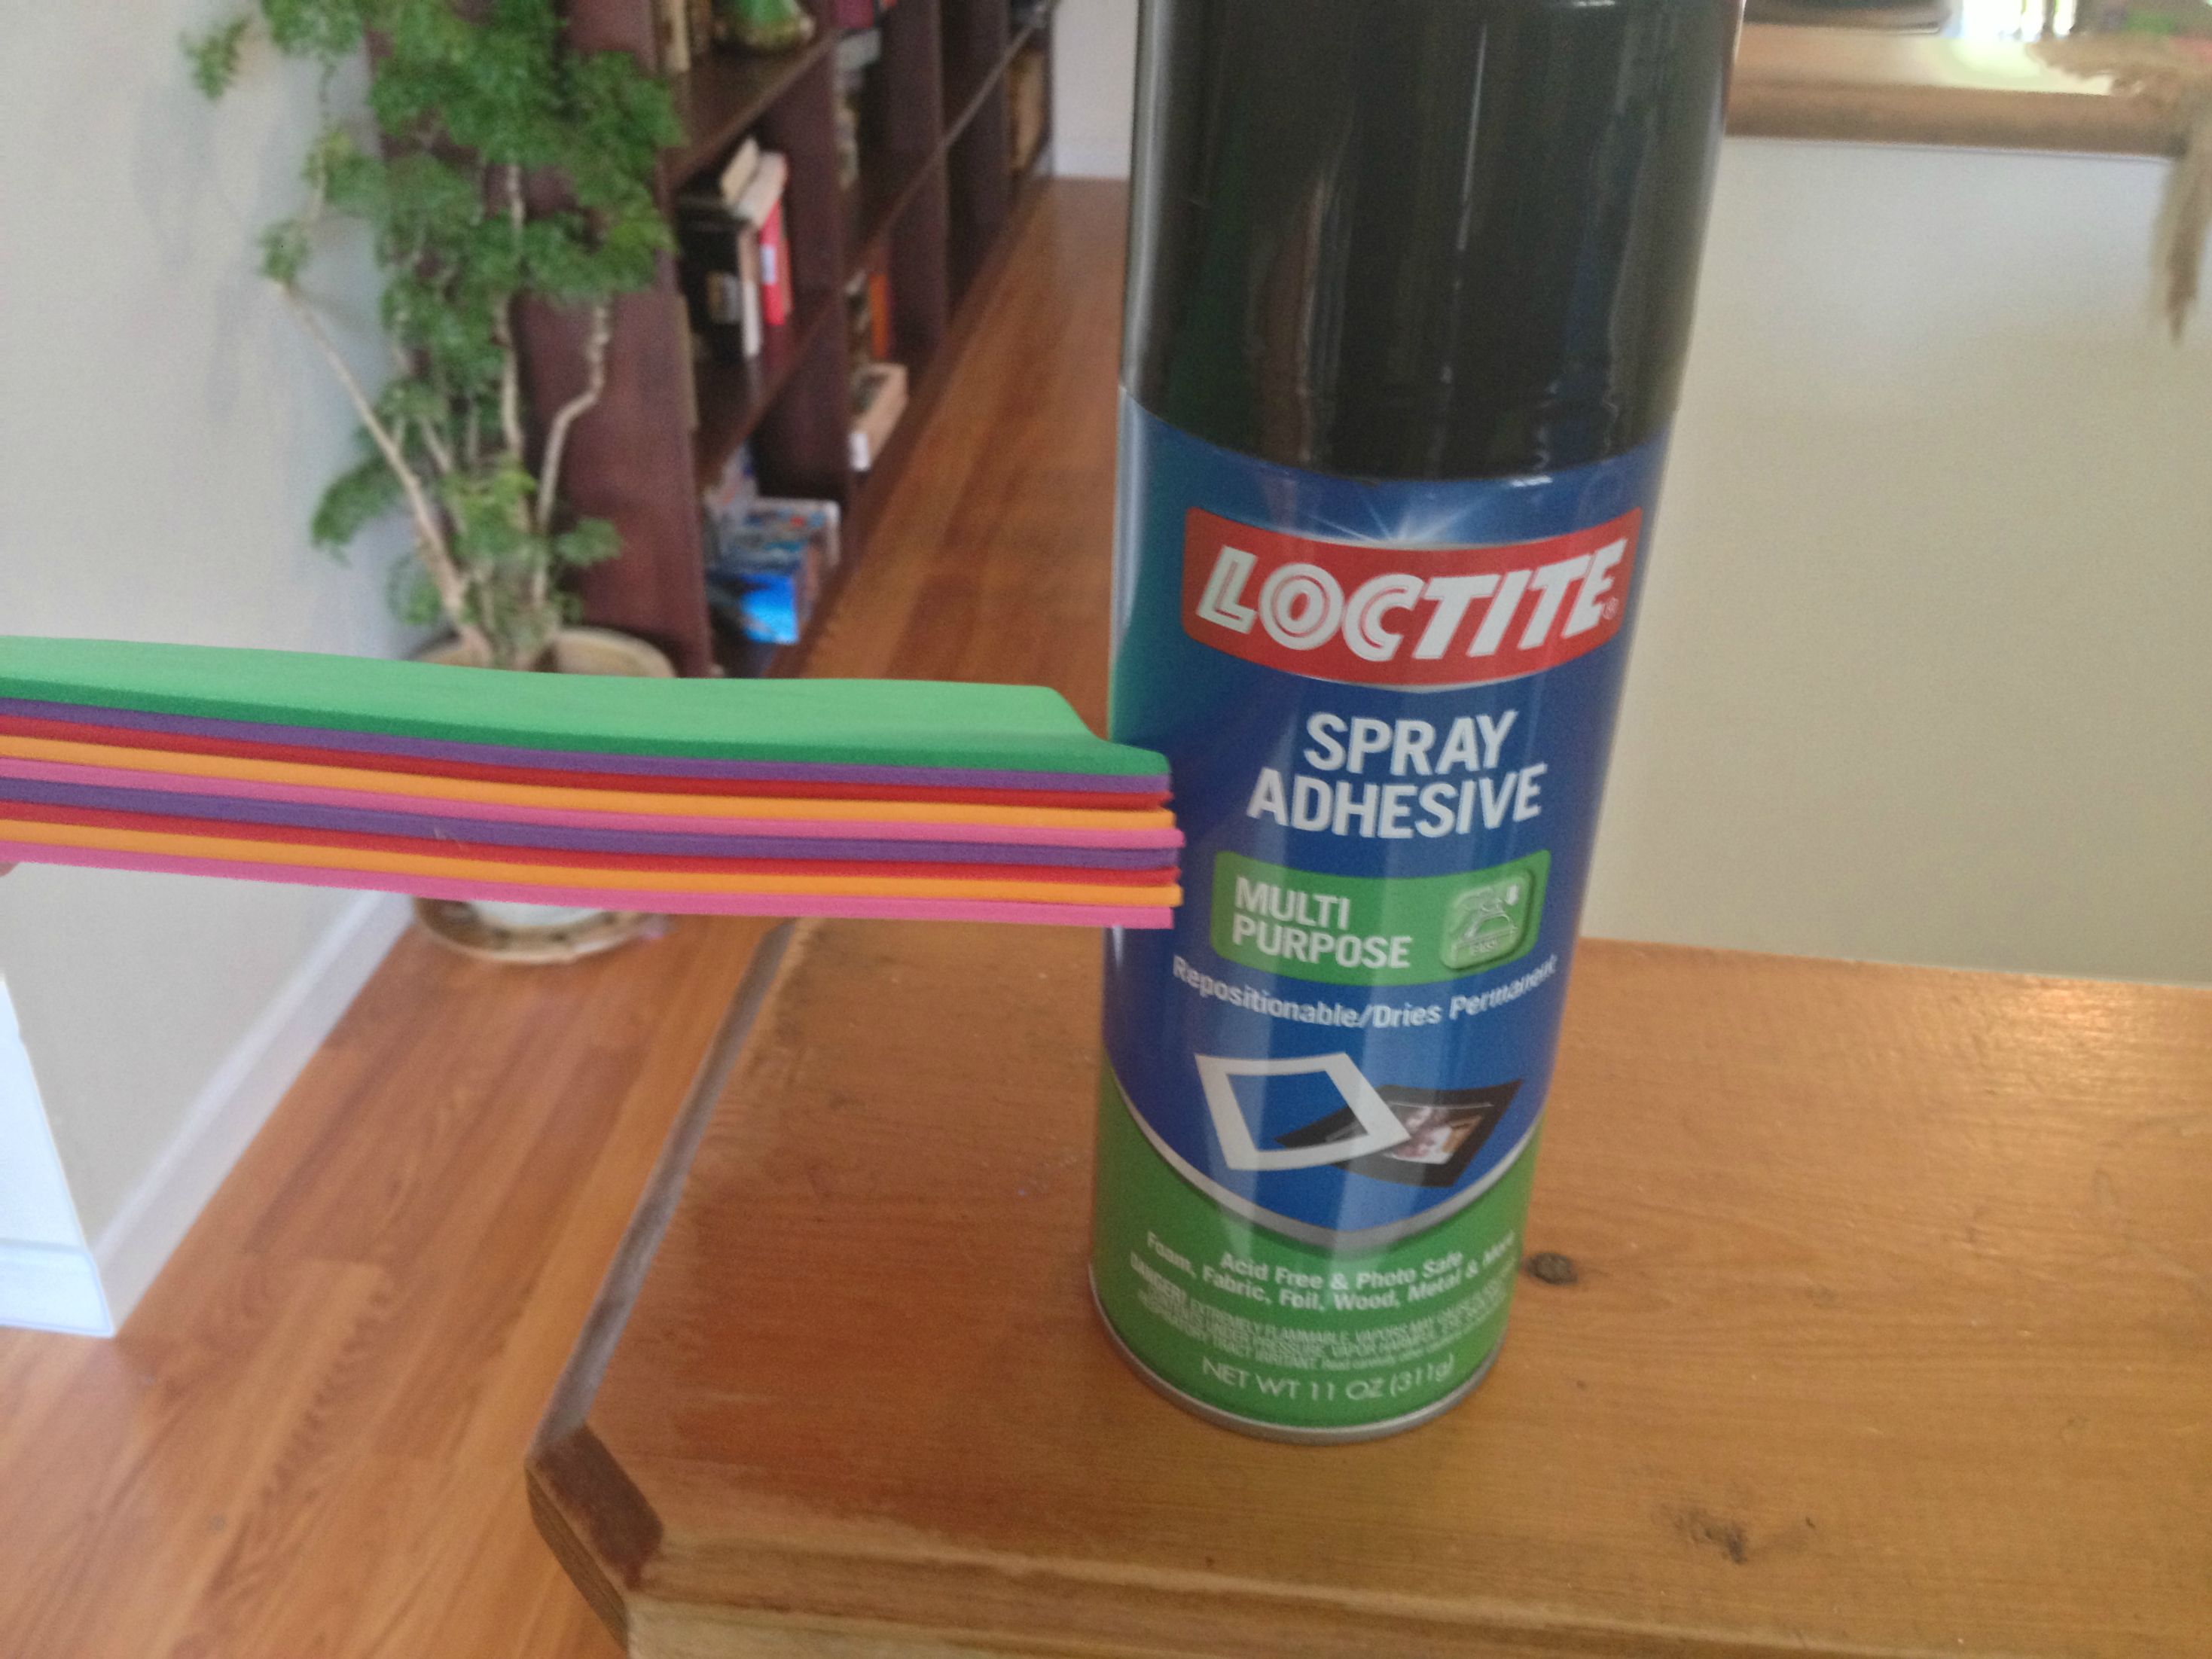 Loctite Spray Adhesive Multi Purpose 11oz